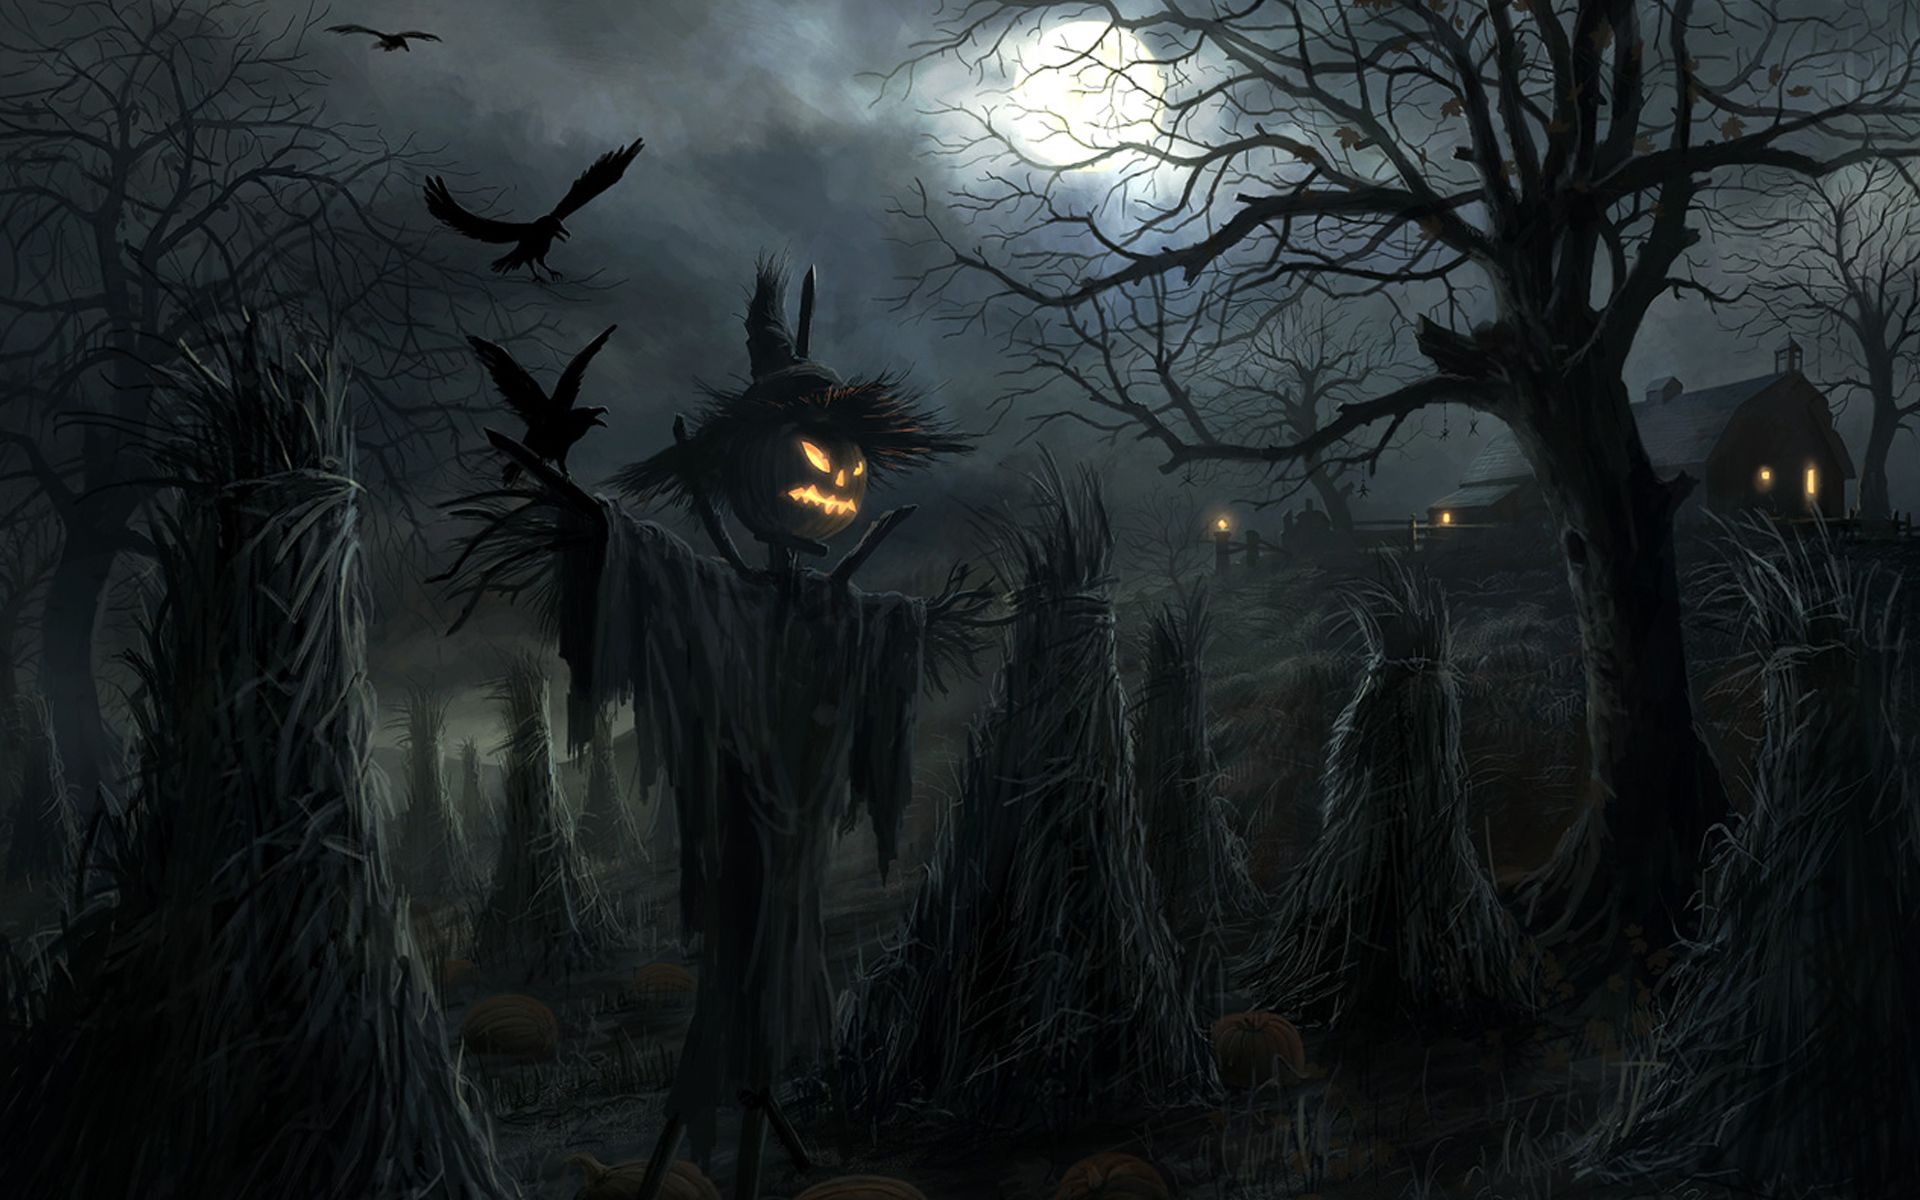 Halloween wallpaper examples: Scary cool desktop background